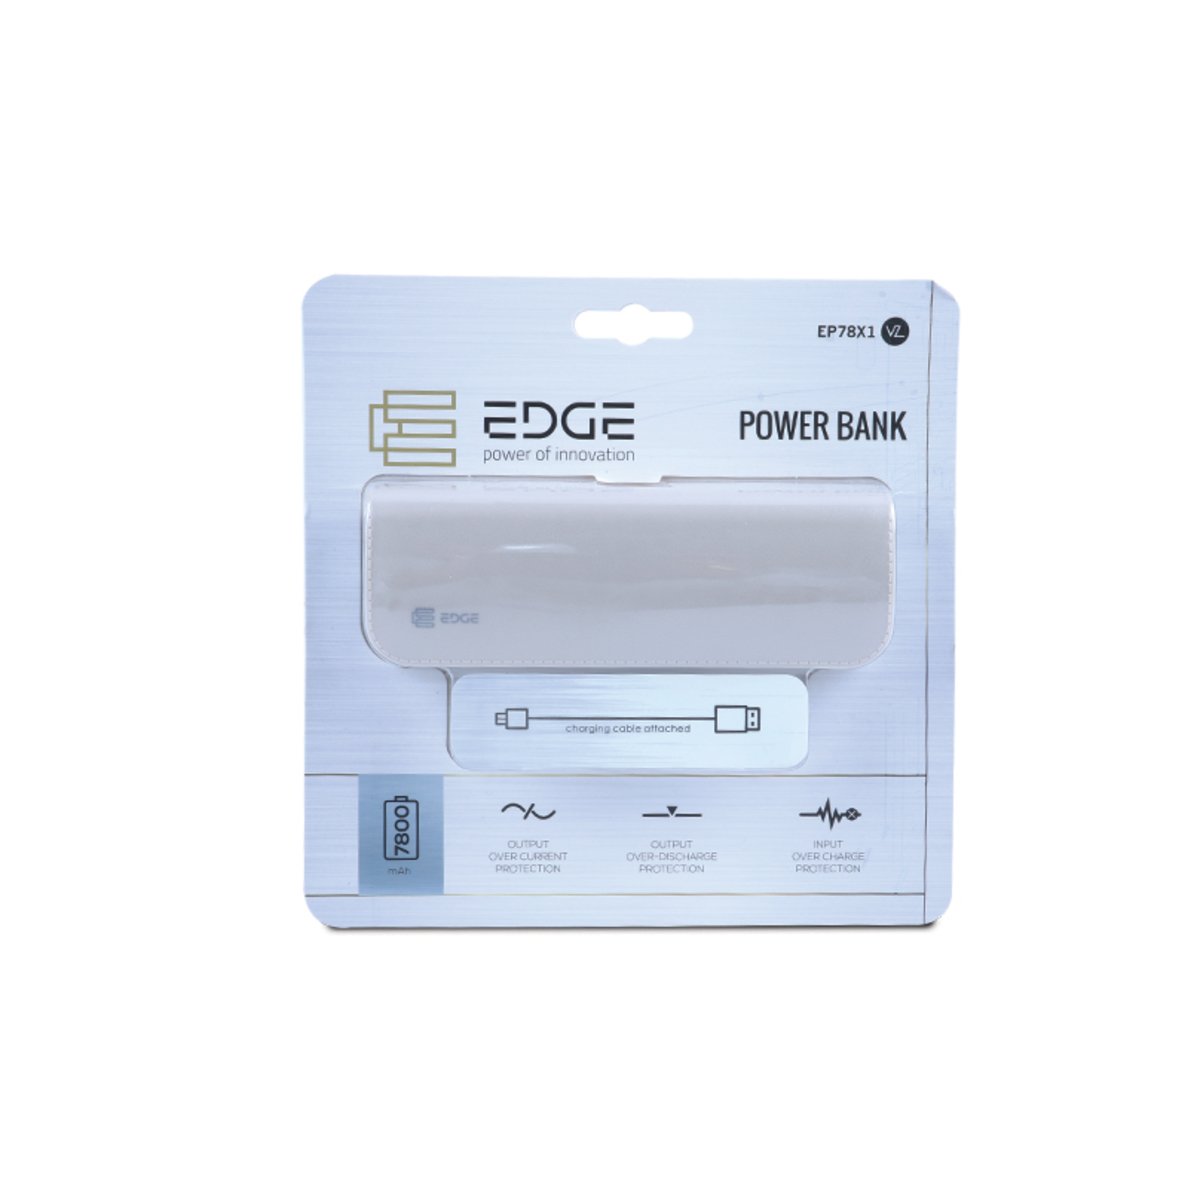 Voz Power Bank 7800mAh EP78X1